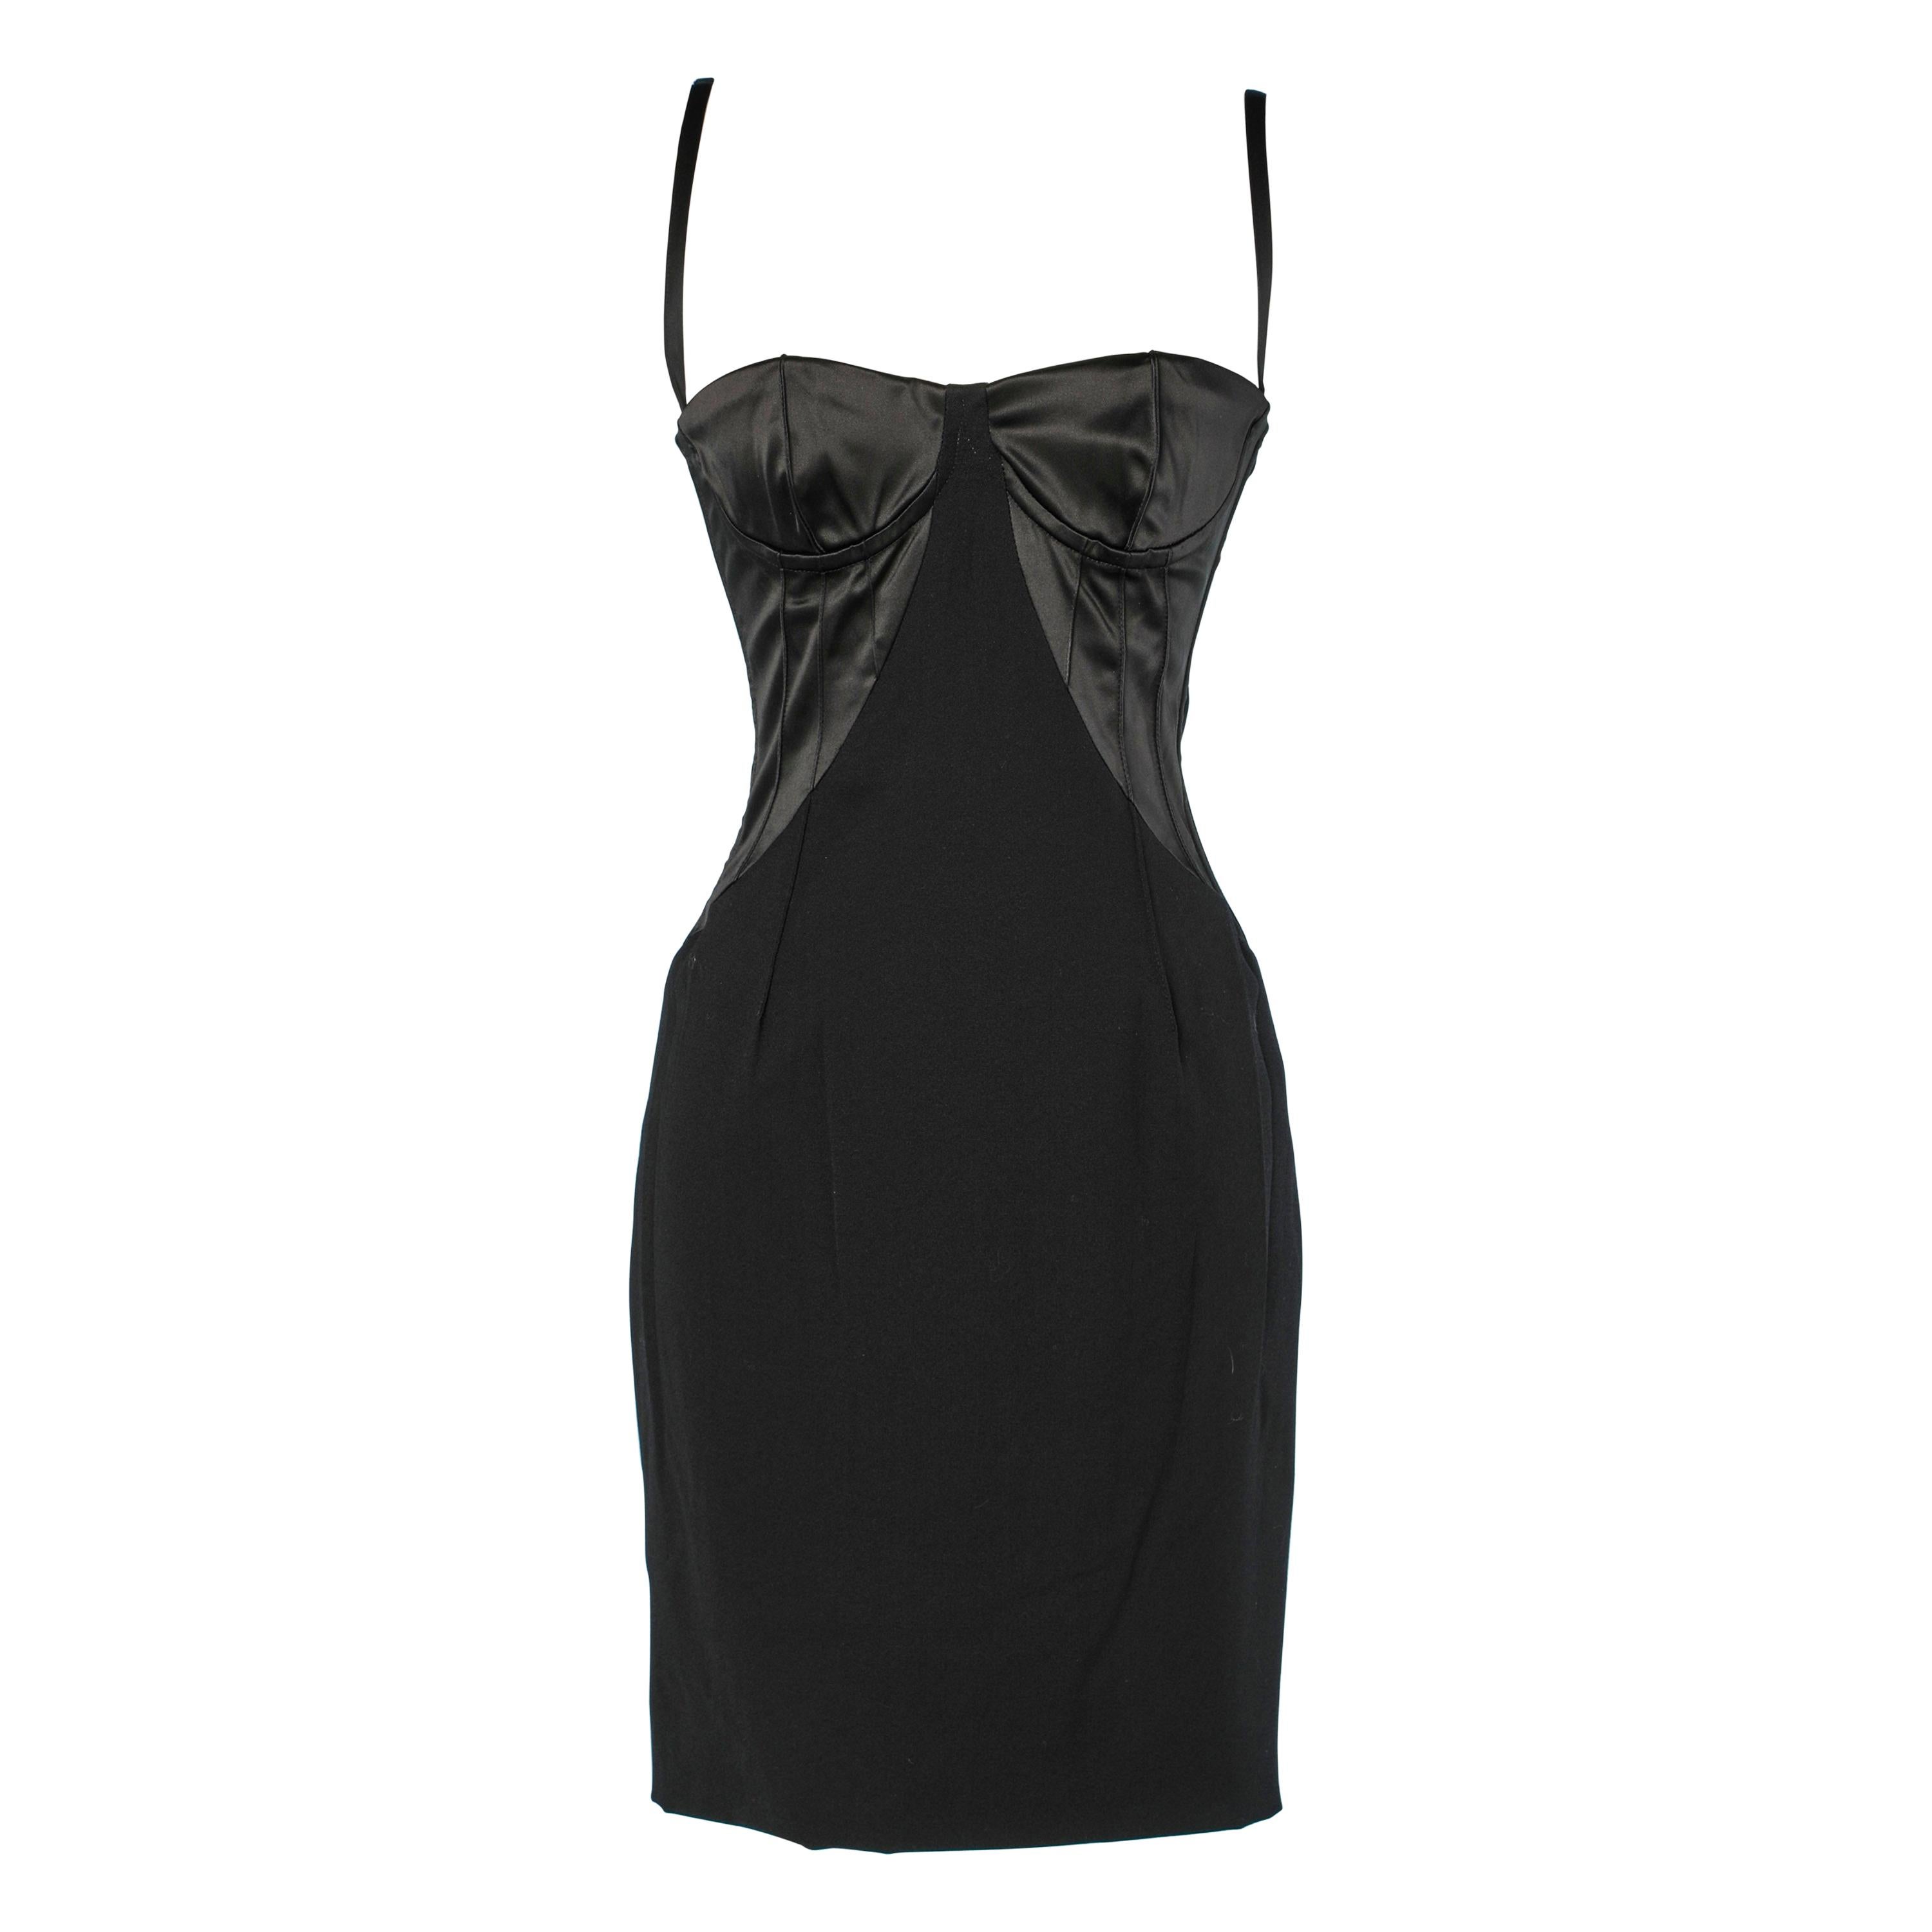 Dolce & Gabbana black bustier dress